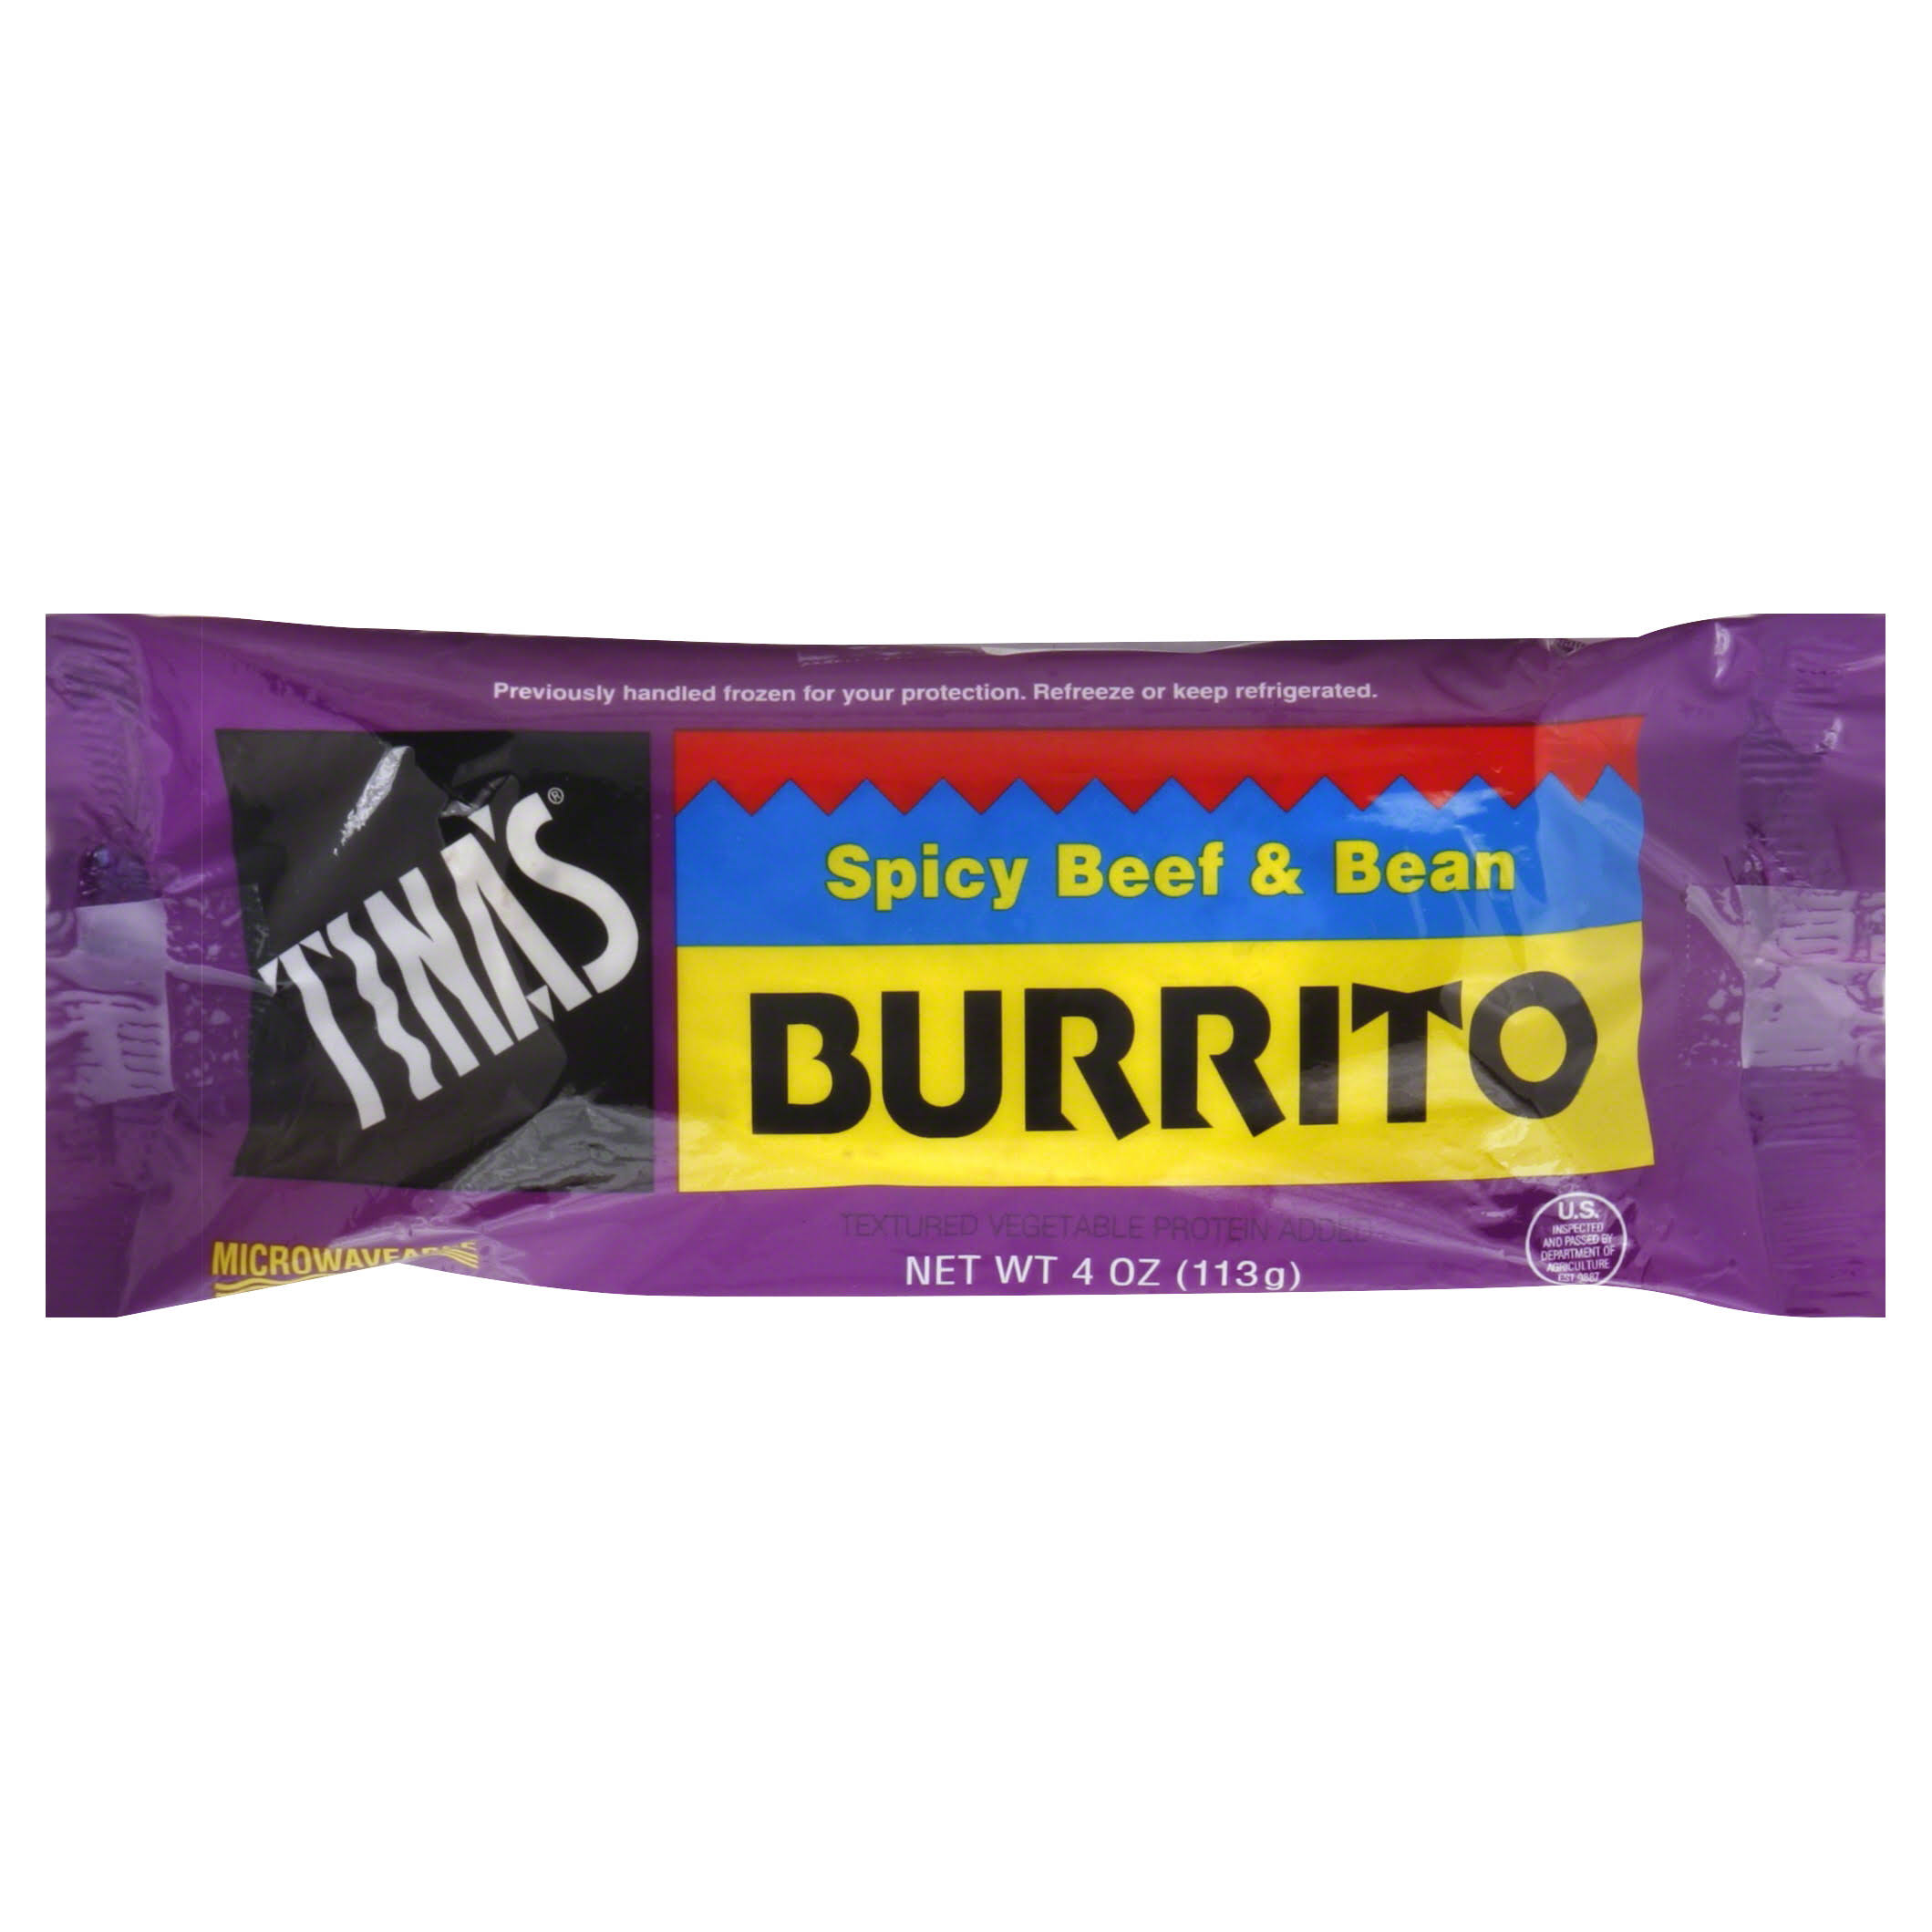 Tinas Burrito, Spicy Beef & Bean - 4 oz